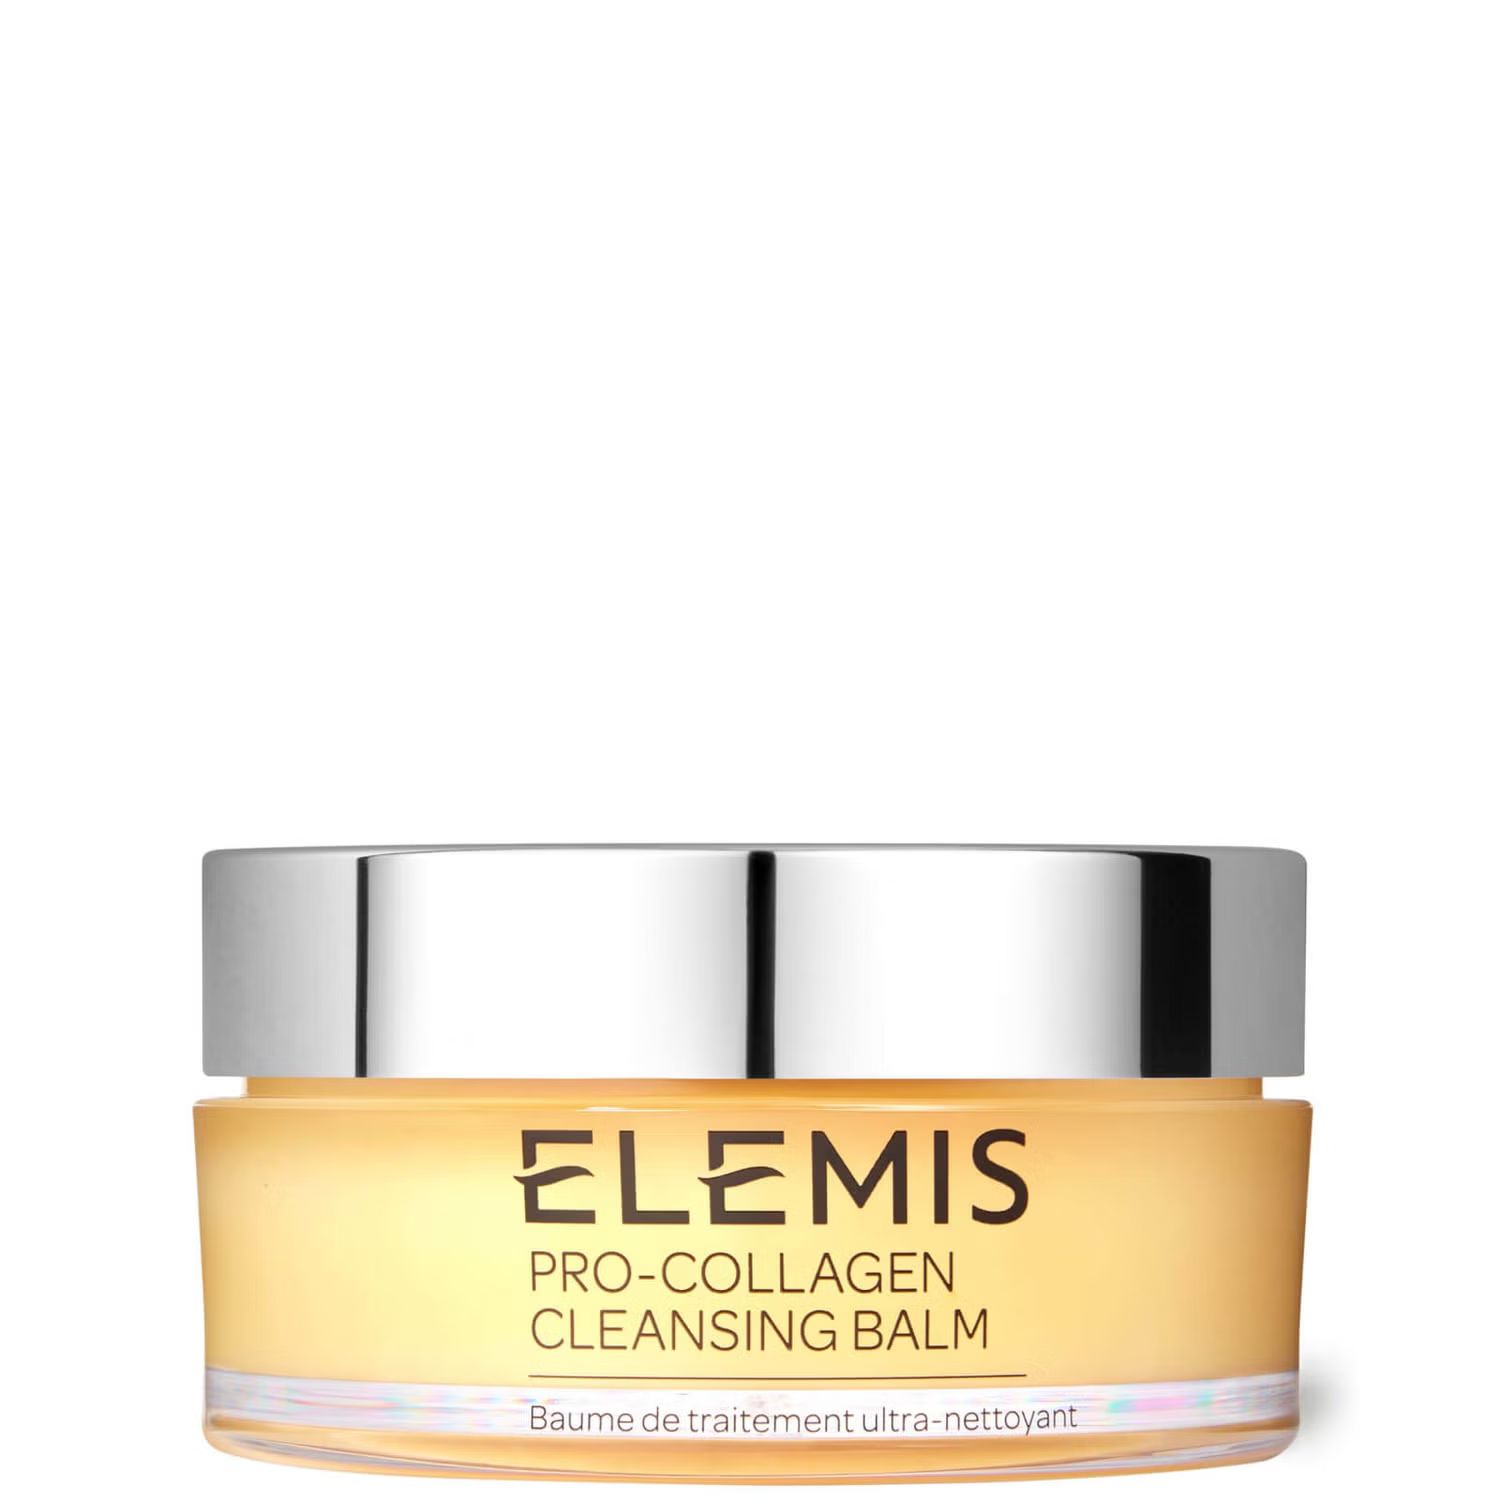 Elemis Pro-Collagen Cleansing Balm 100g | Look Fantastic (ROW)